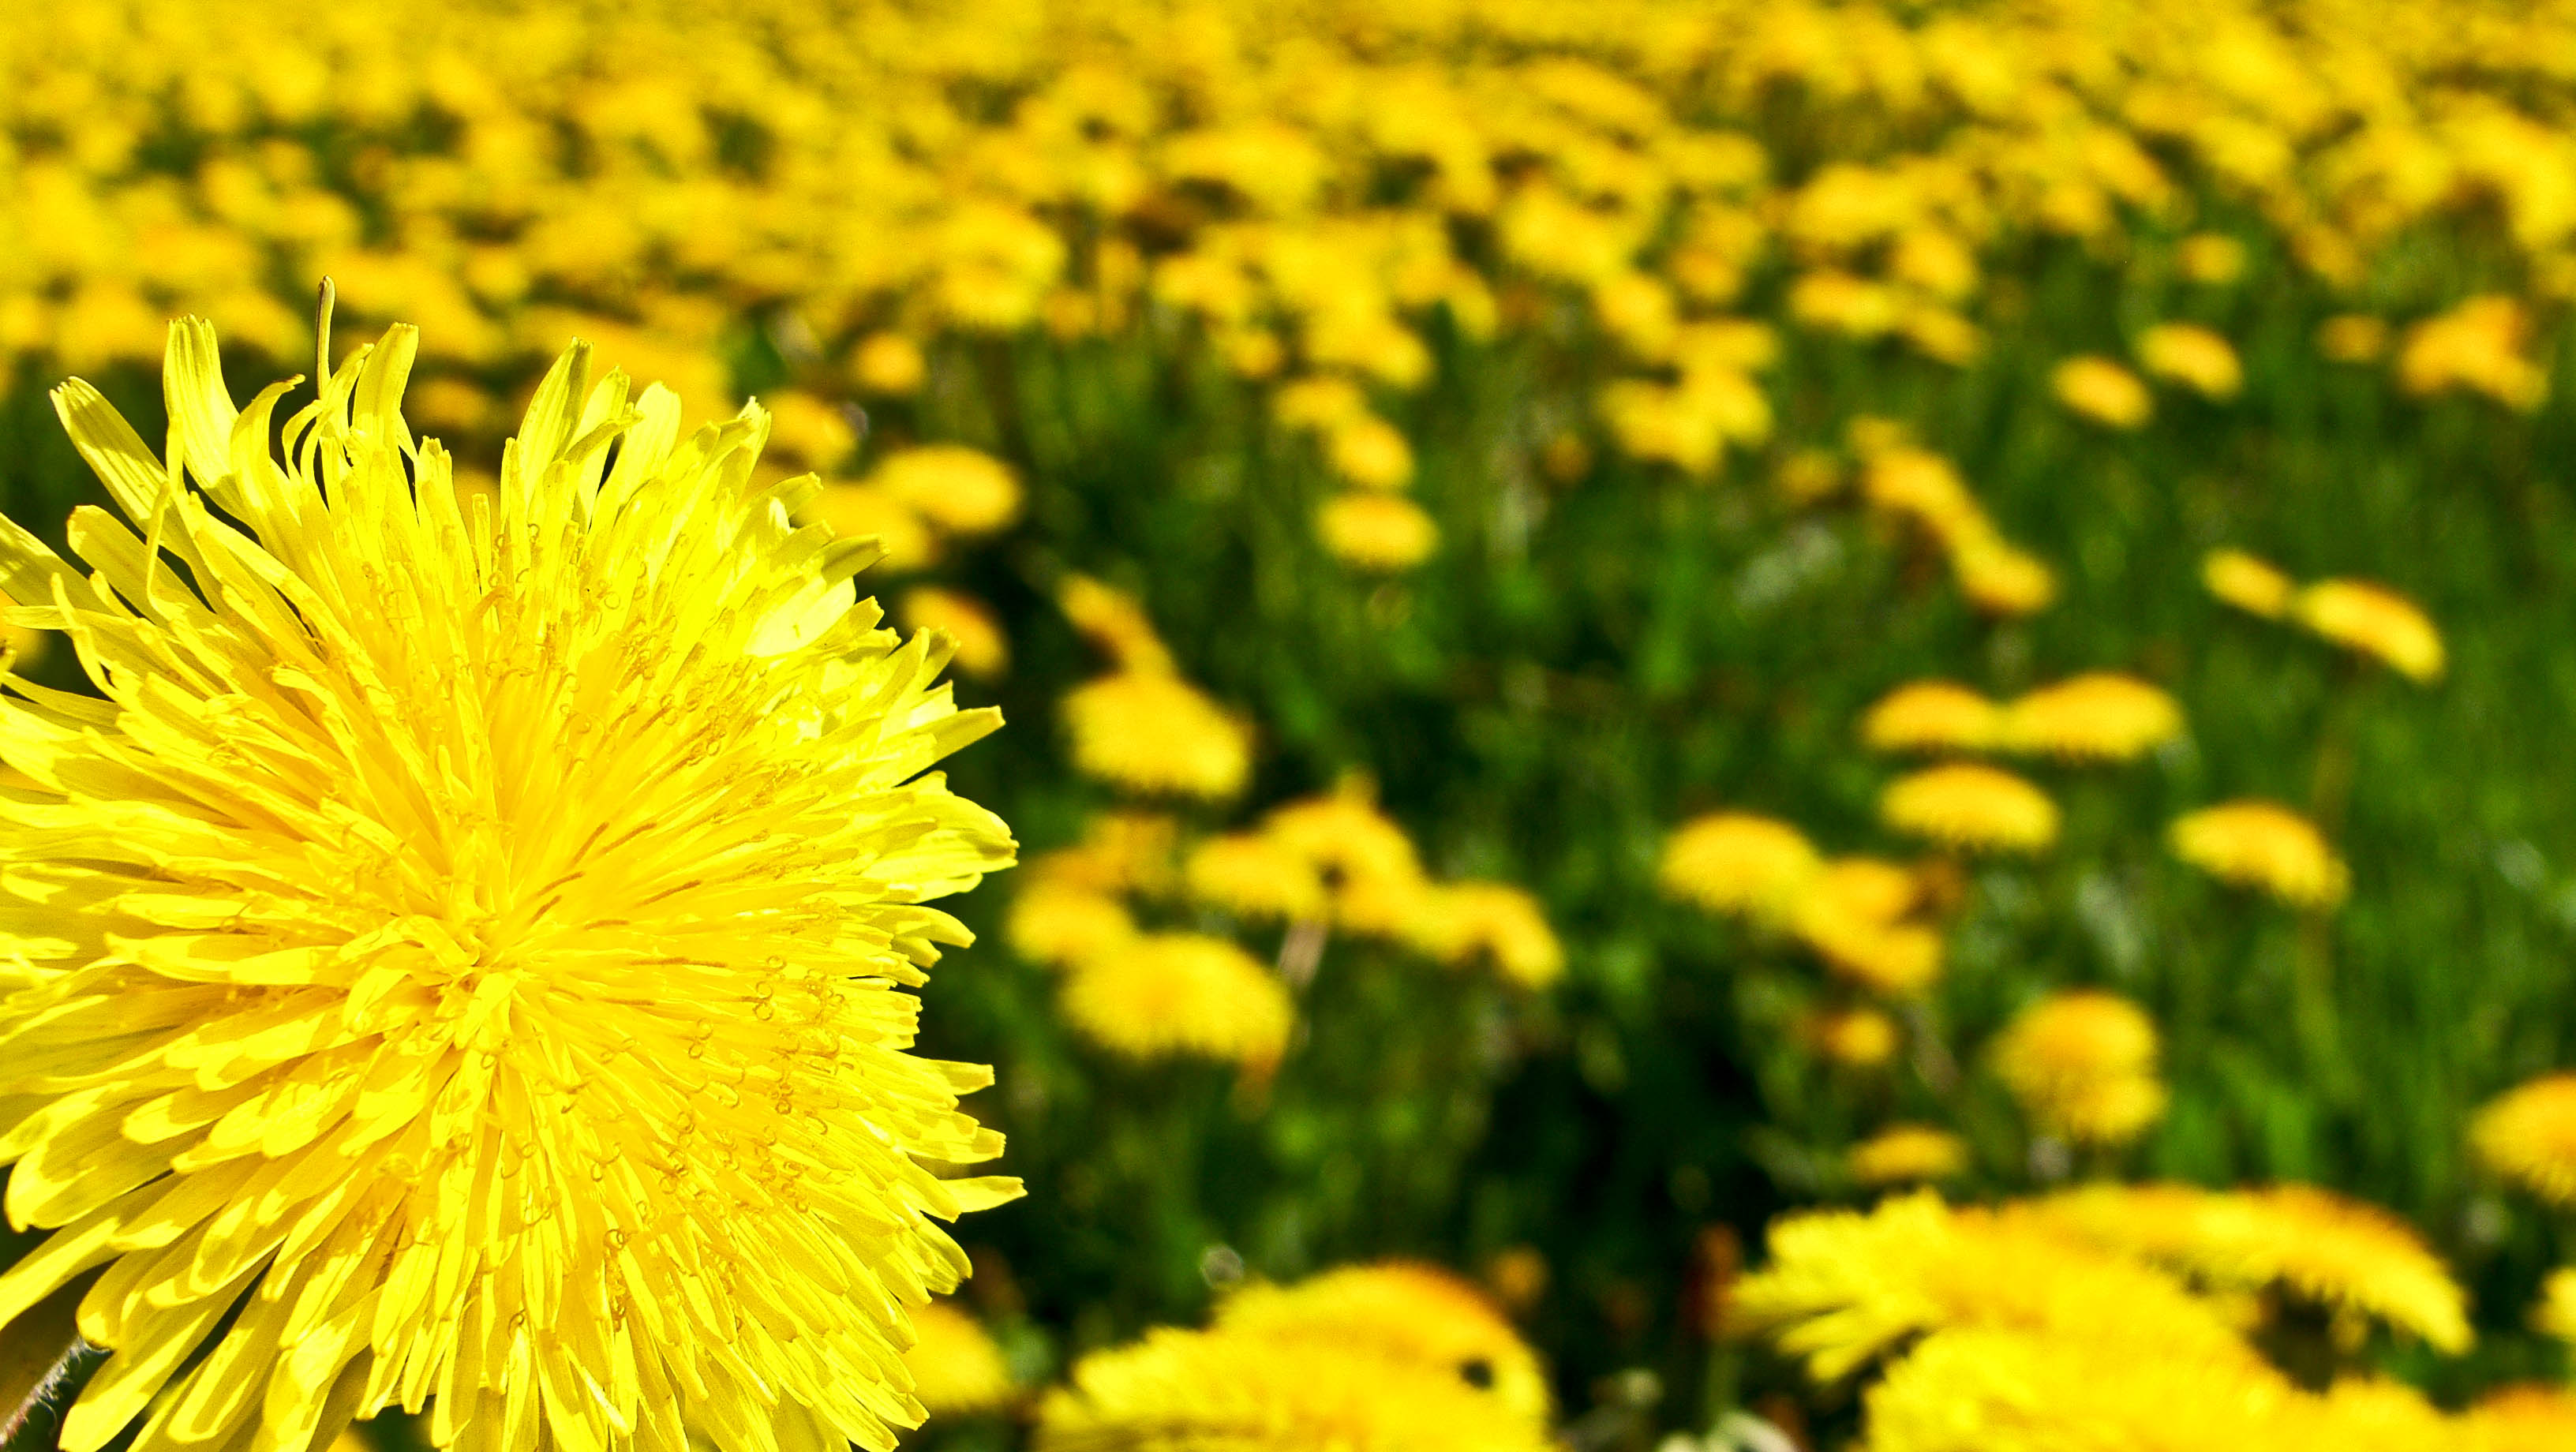 flowers, yellow, dandelions, yellow flowers - desktop wallpaper